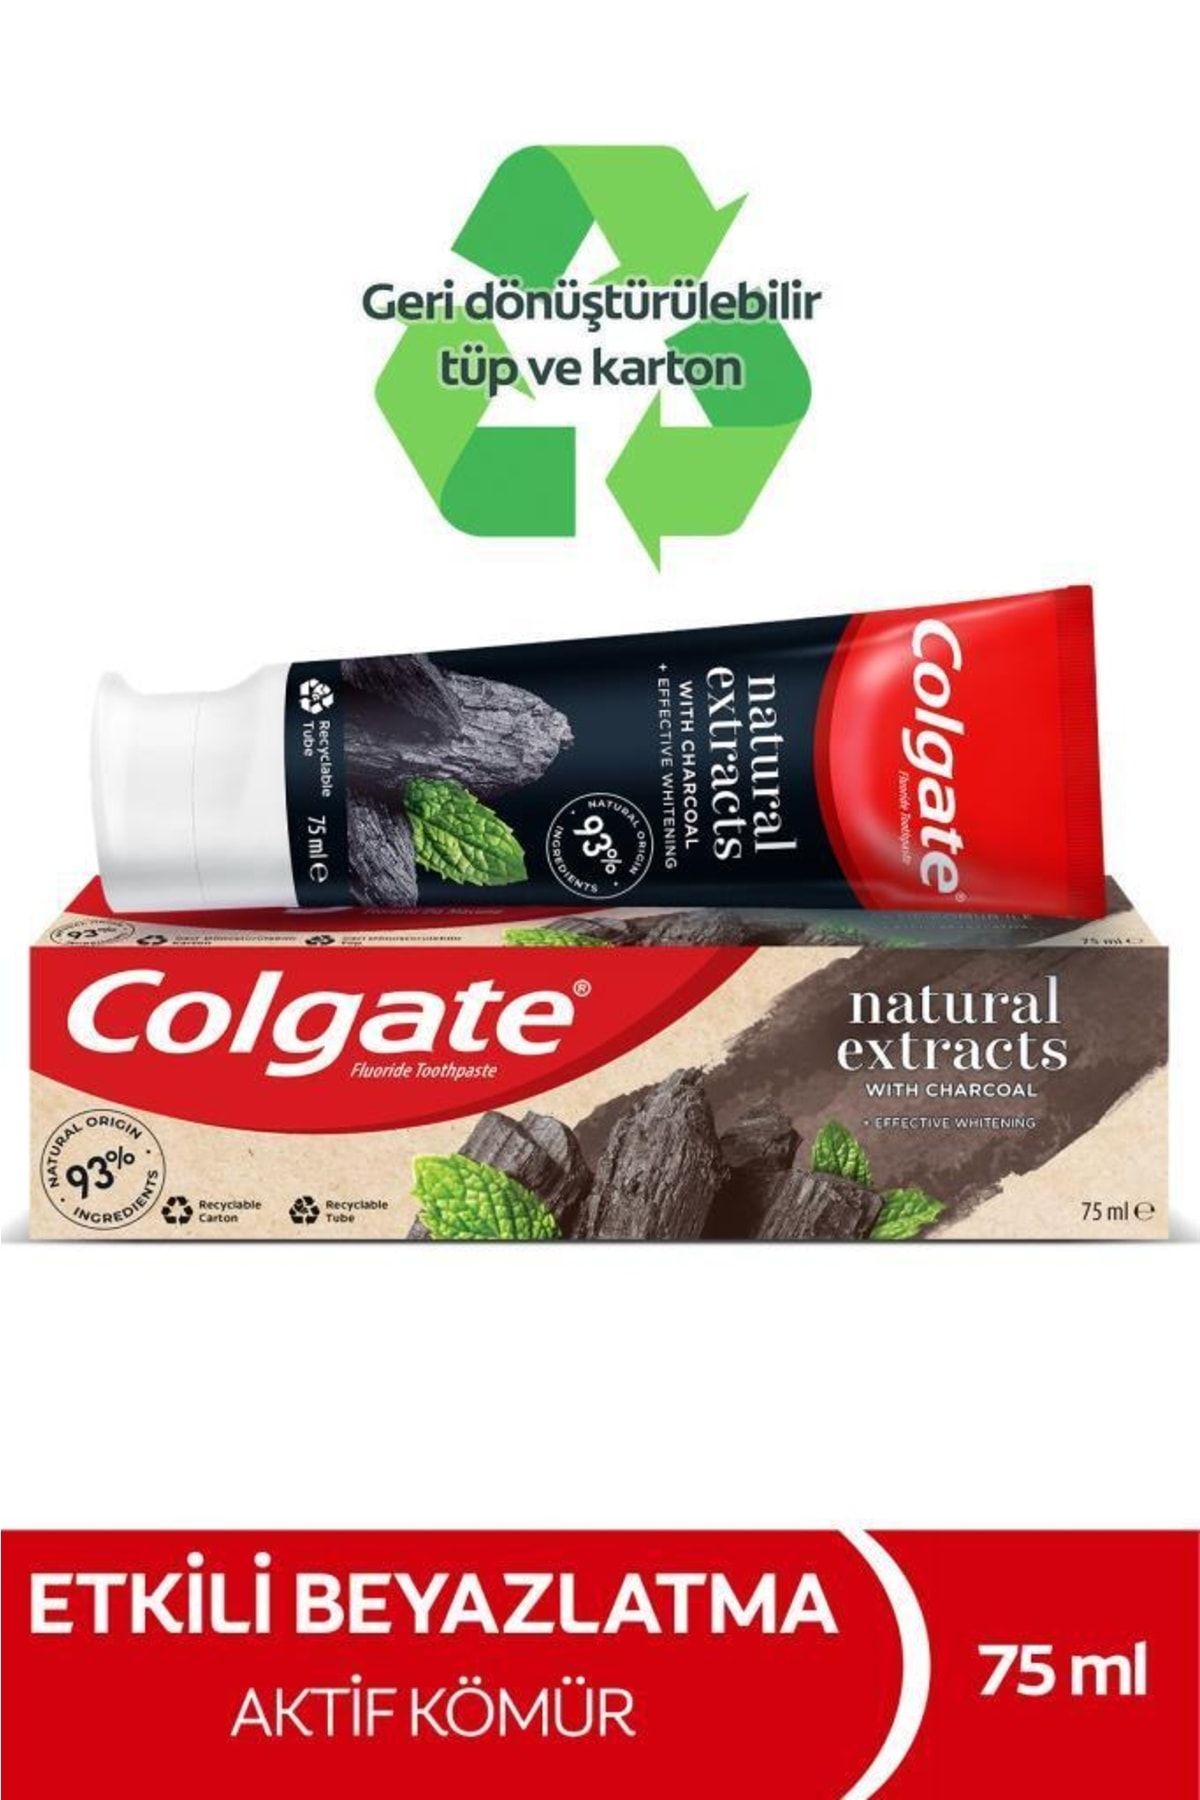 Colgate Natural Extracts Aktif Karbon ve Nane Saf Temizlik Diş Macunu 75 ml